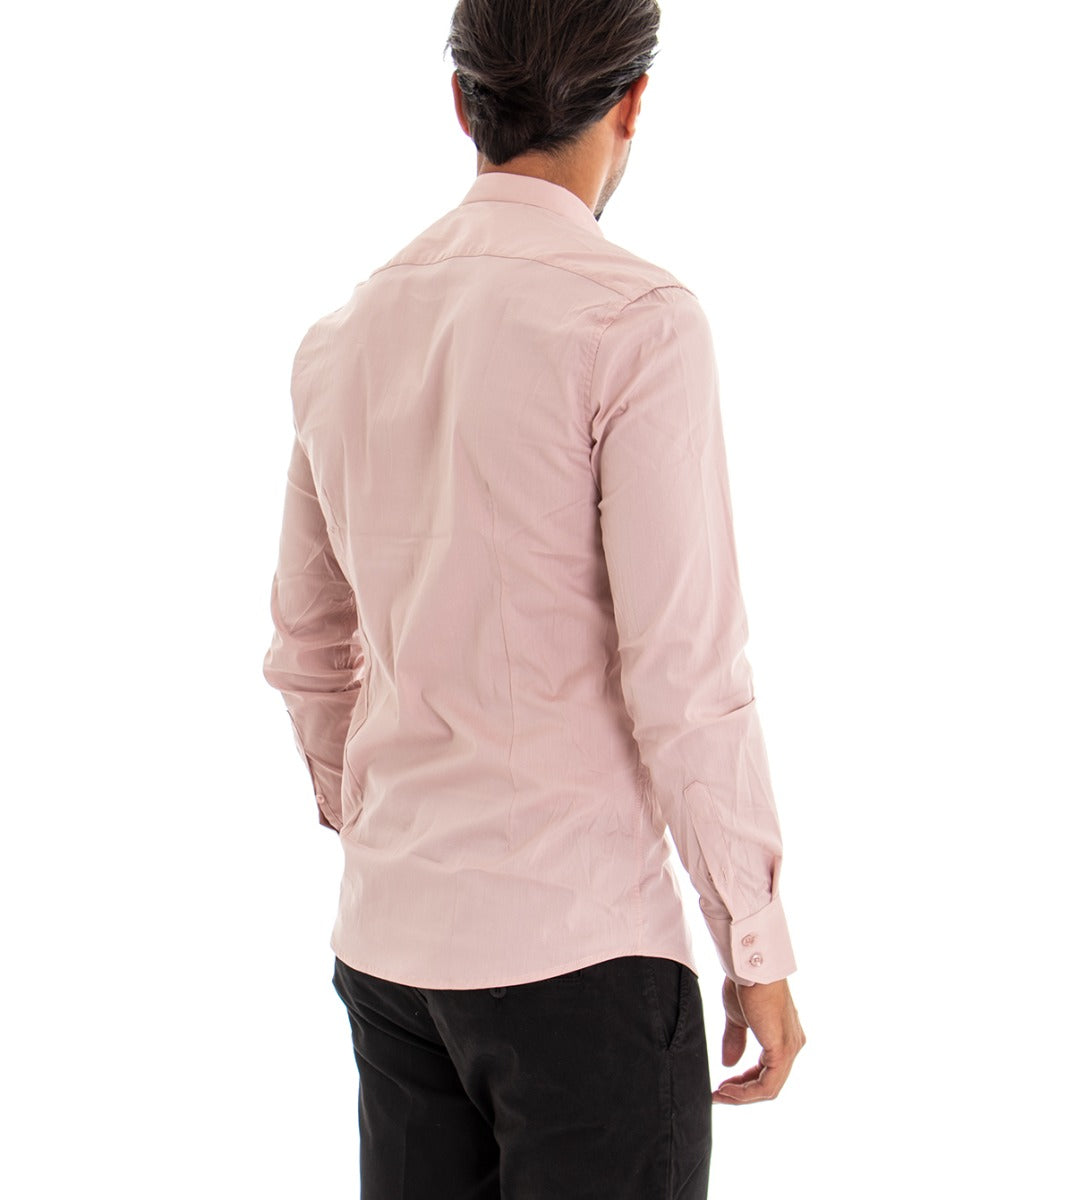 Men's Mandarin Collar Shirt Long Sleeve Slim Fit Basic Casual Cotton Pink GIOSAL-C1817A